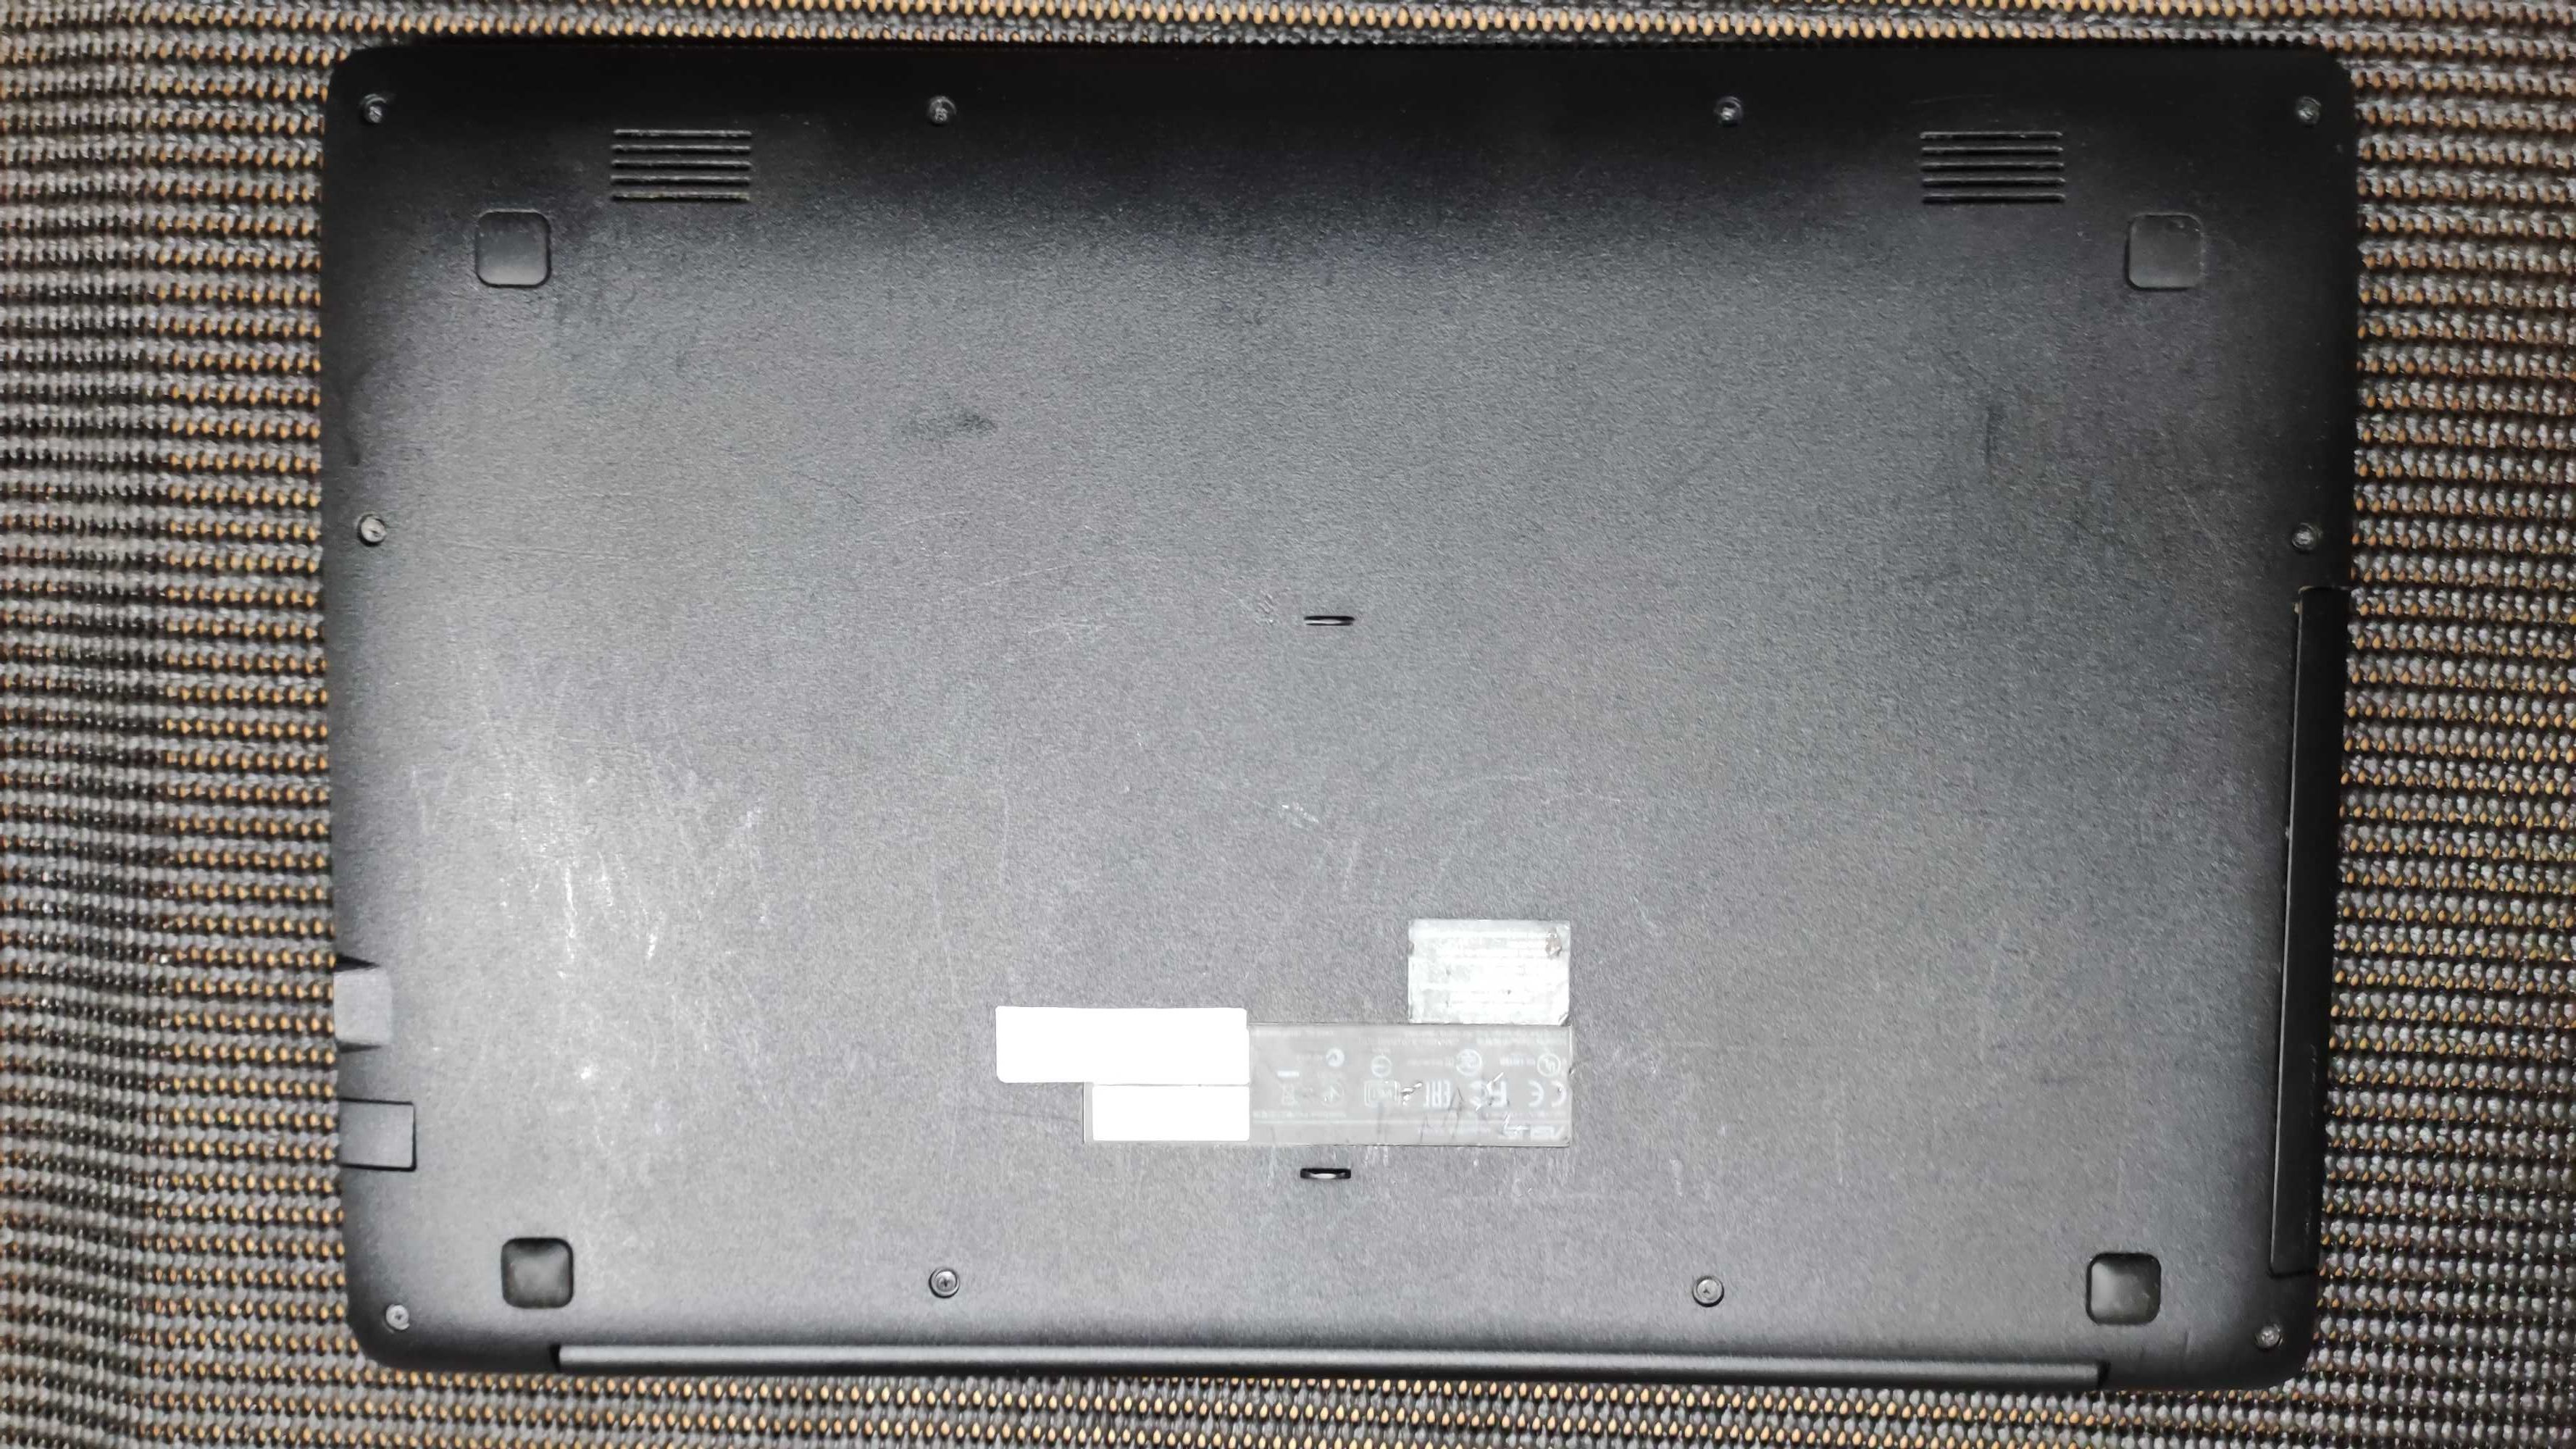 Ноутбук Asus X553M 15.6" /Celeron N2840 2.58GHz /4ГБ DDR3 /128ГБ SSD